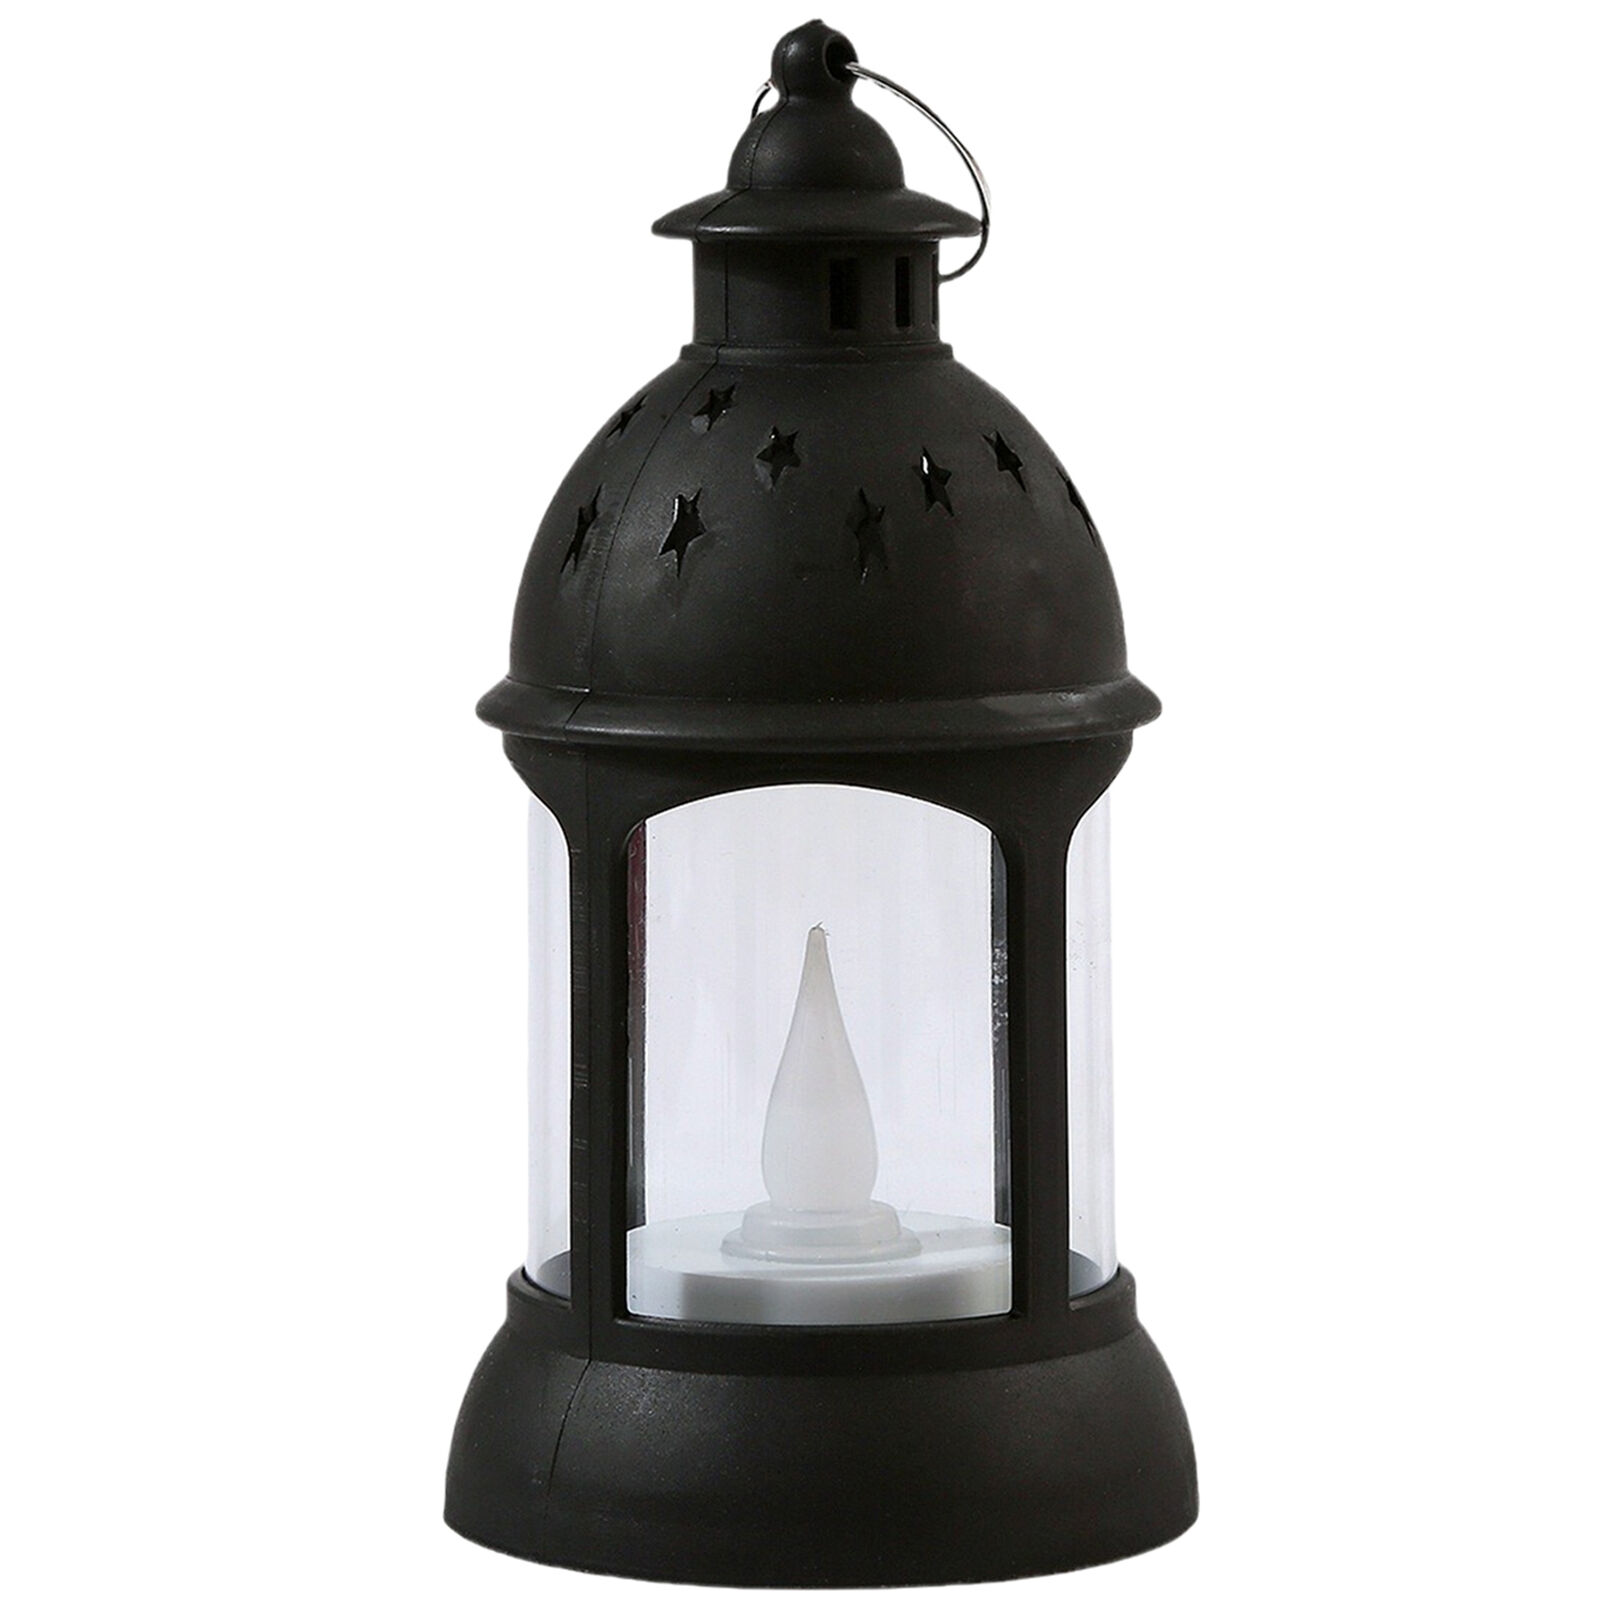 Vintage Lanterns Flickering Flame LED Lantern Table Centerpiece Decorative 